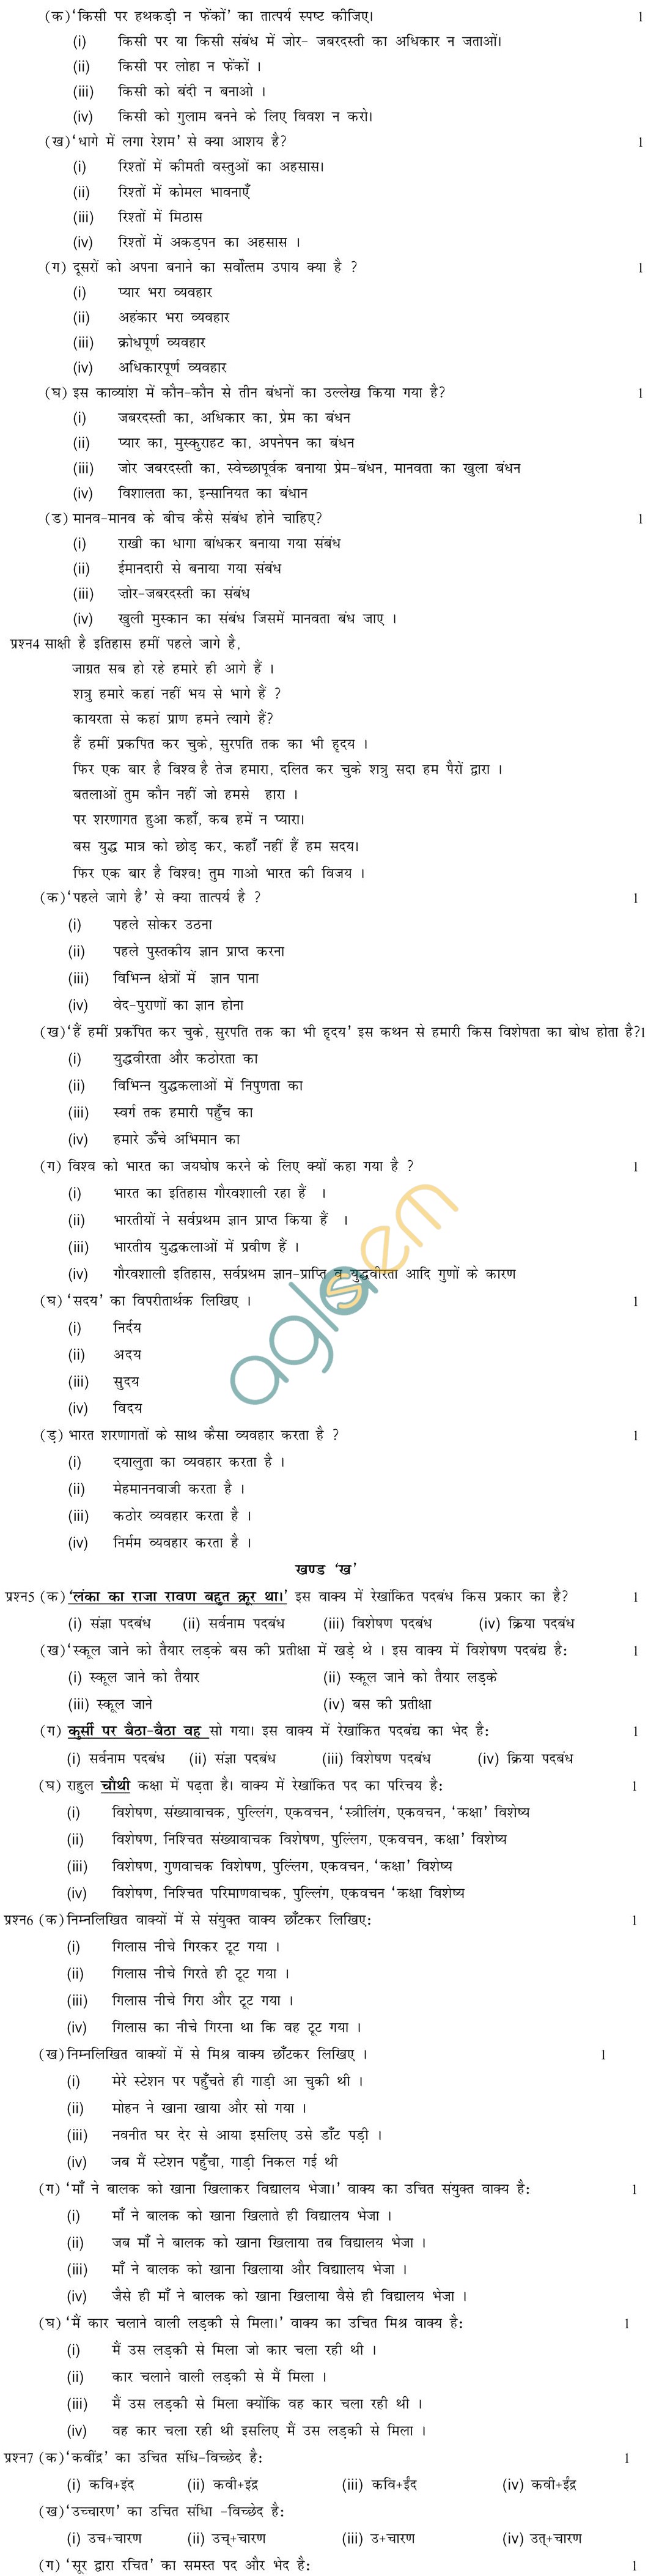 CBSE Board Exam 2013 Sample Papers (SA2) Class X - Hindi – B